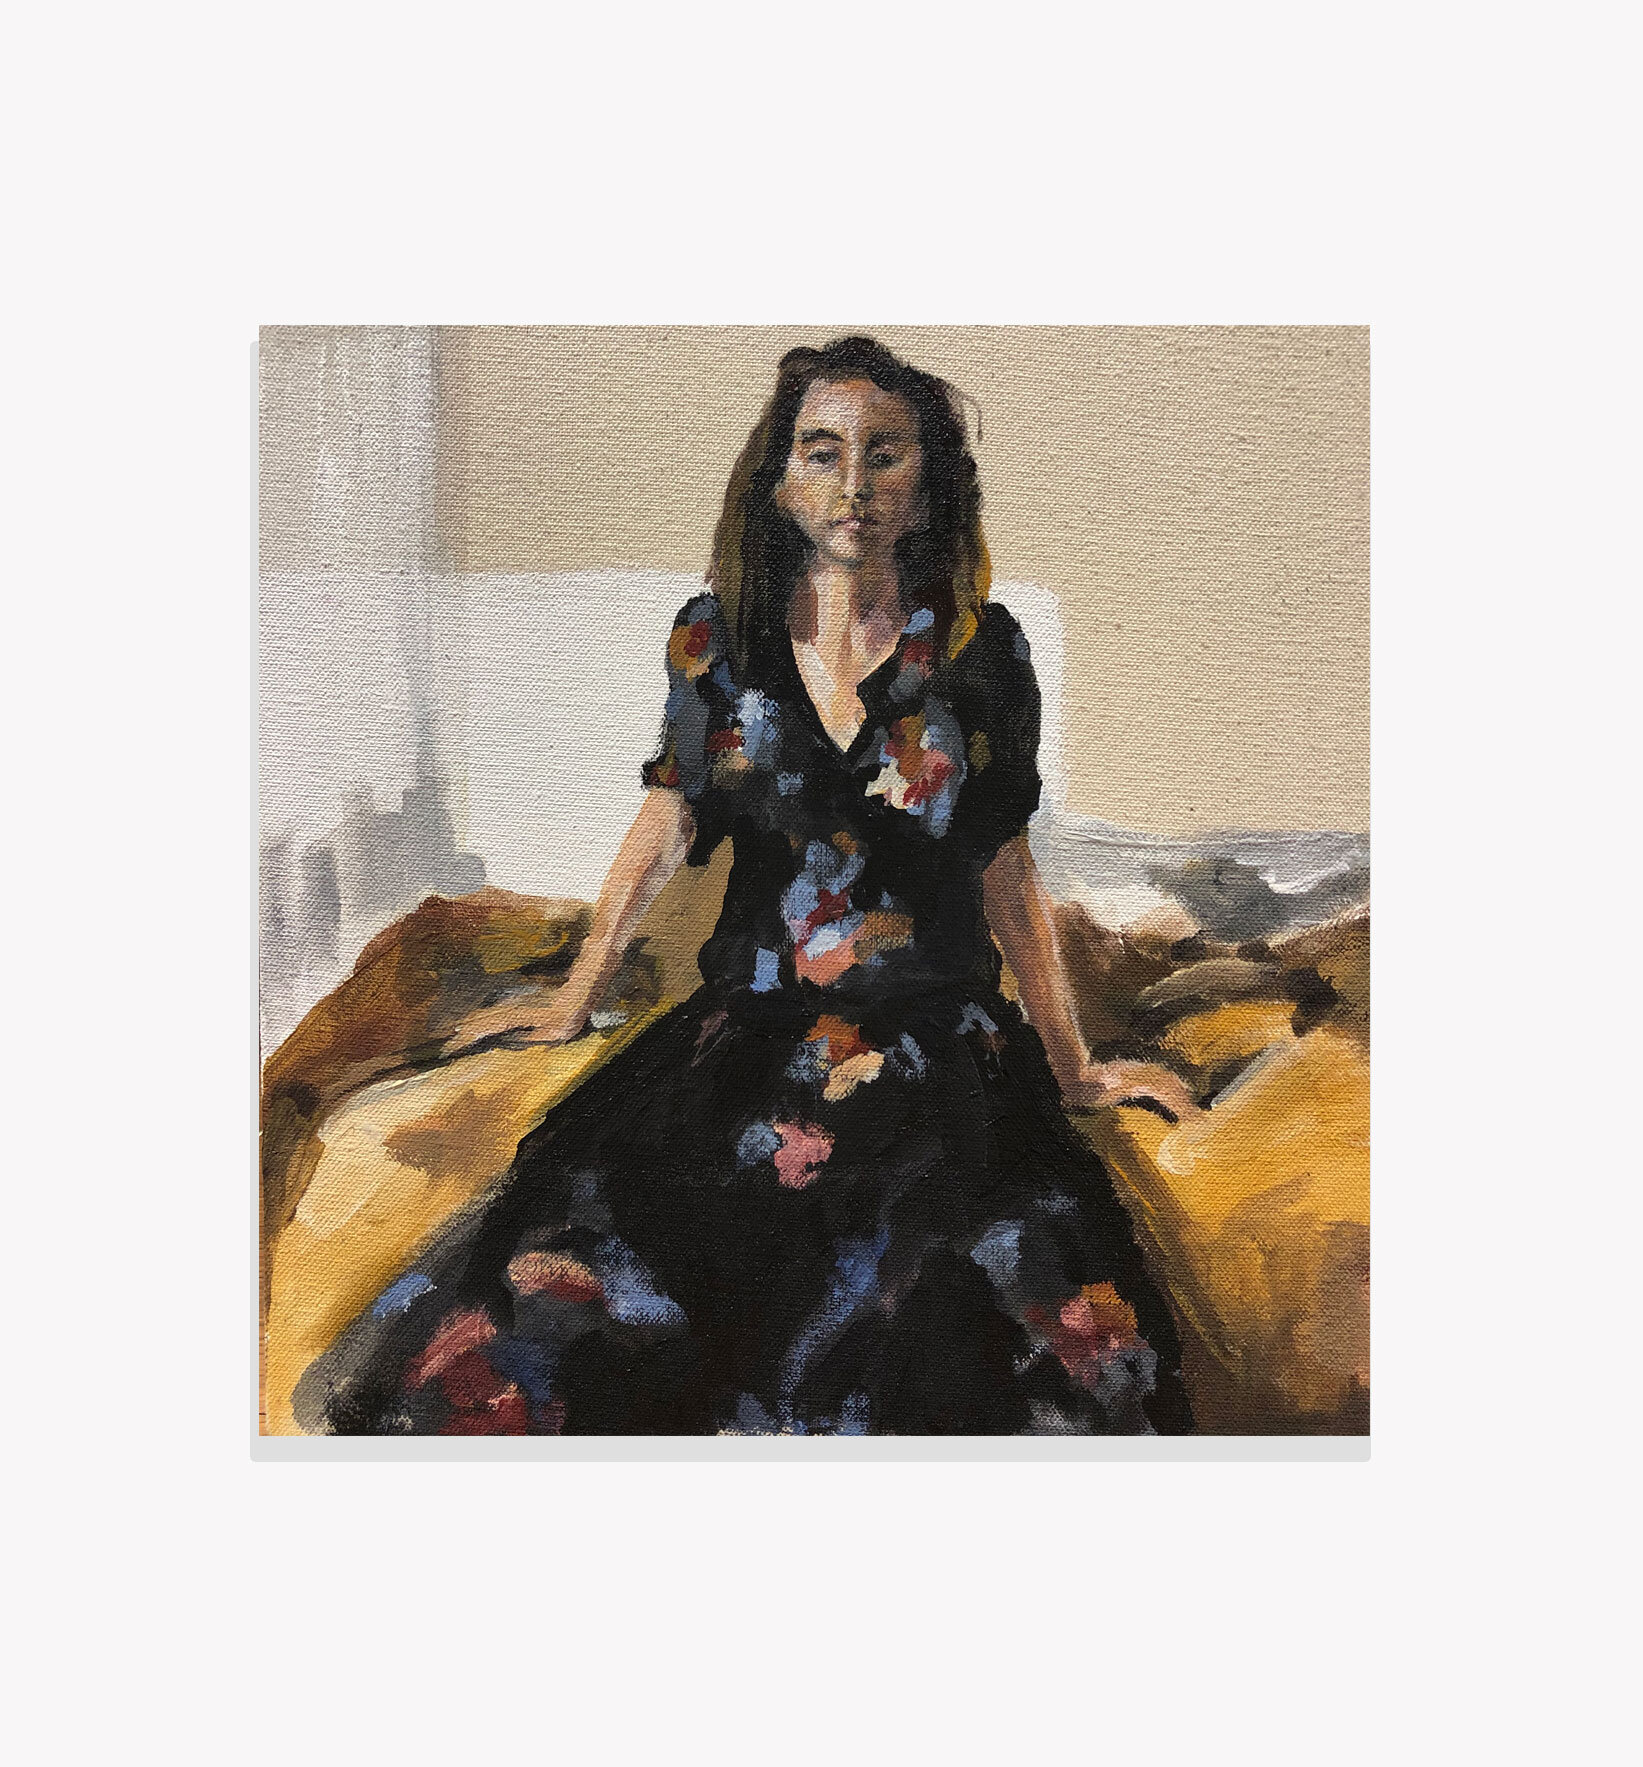   Impatient , Kristi Head 2020. Acrylic on canvas, 10 x 10 inches. 